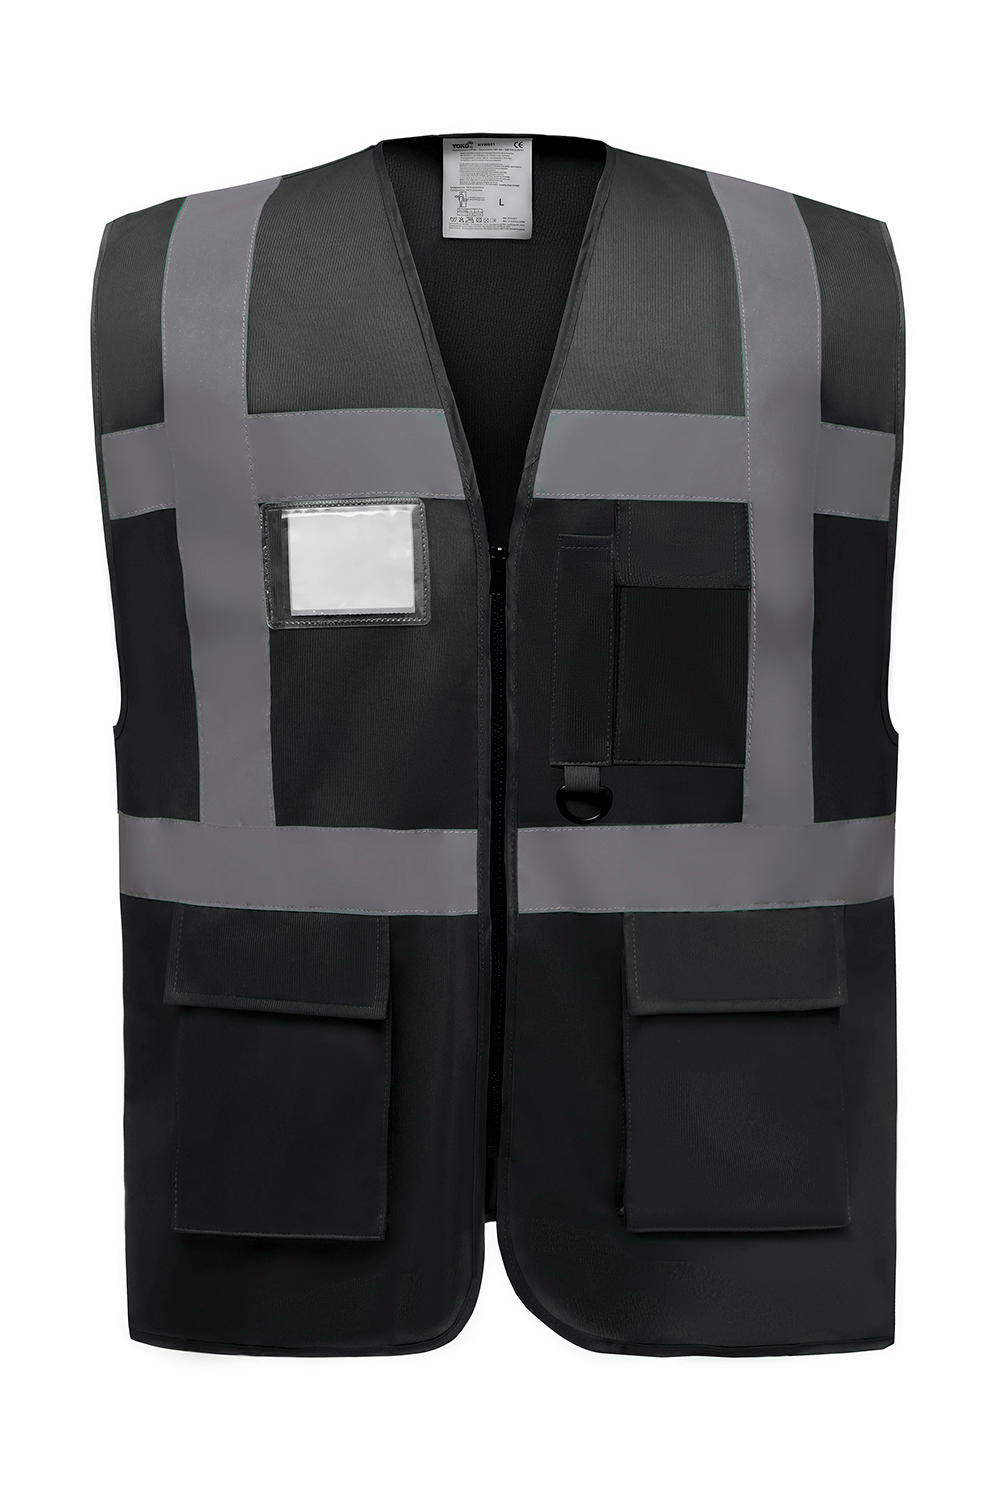  Fluo Executive Waistcoat in Farbe Black